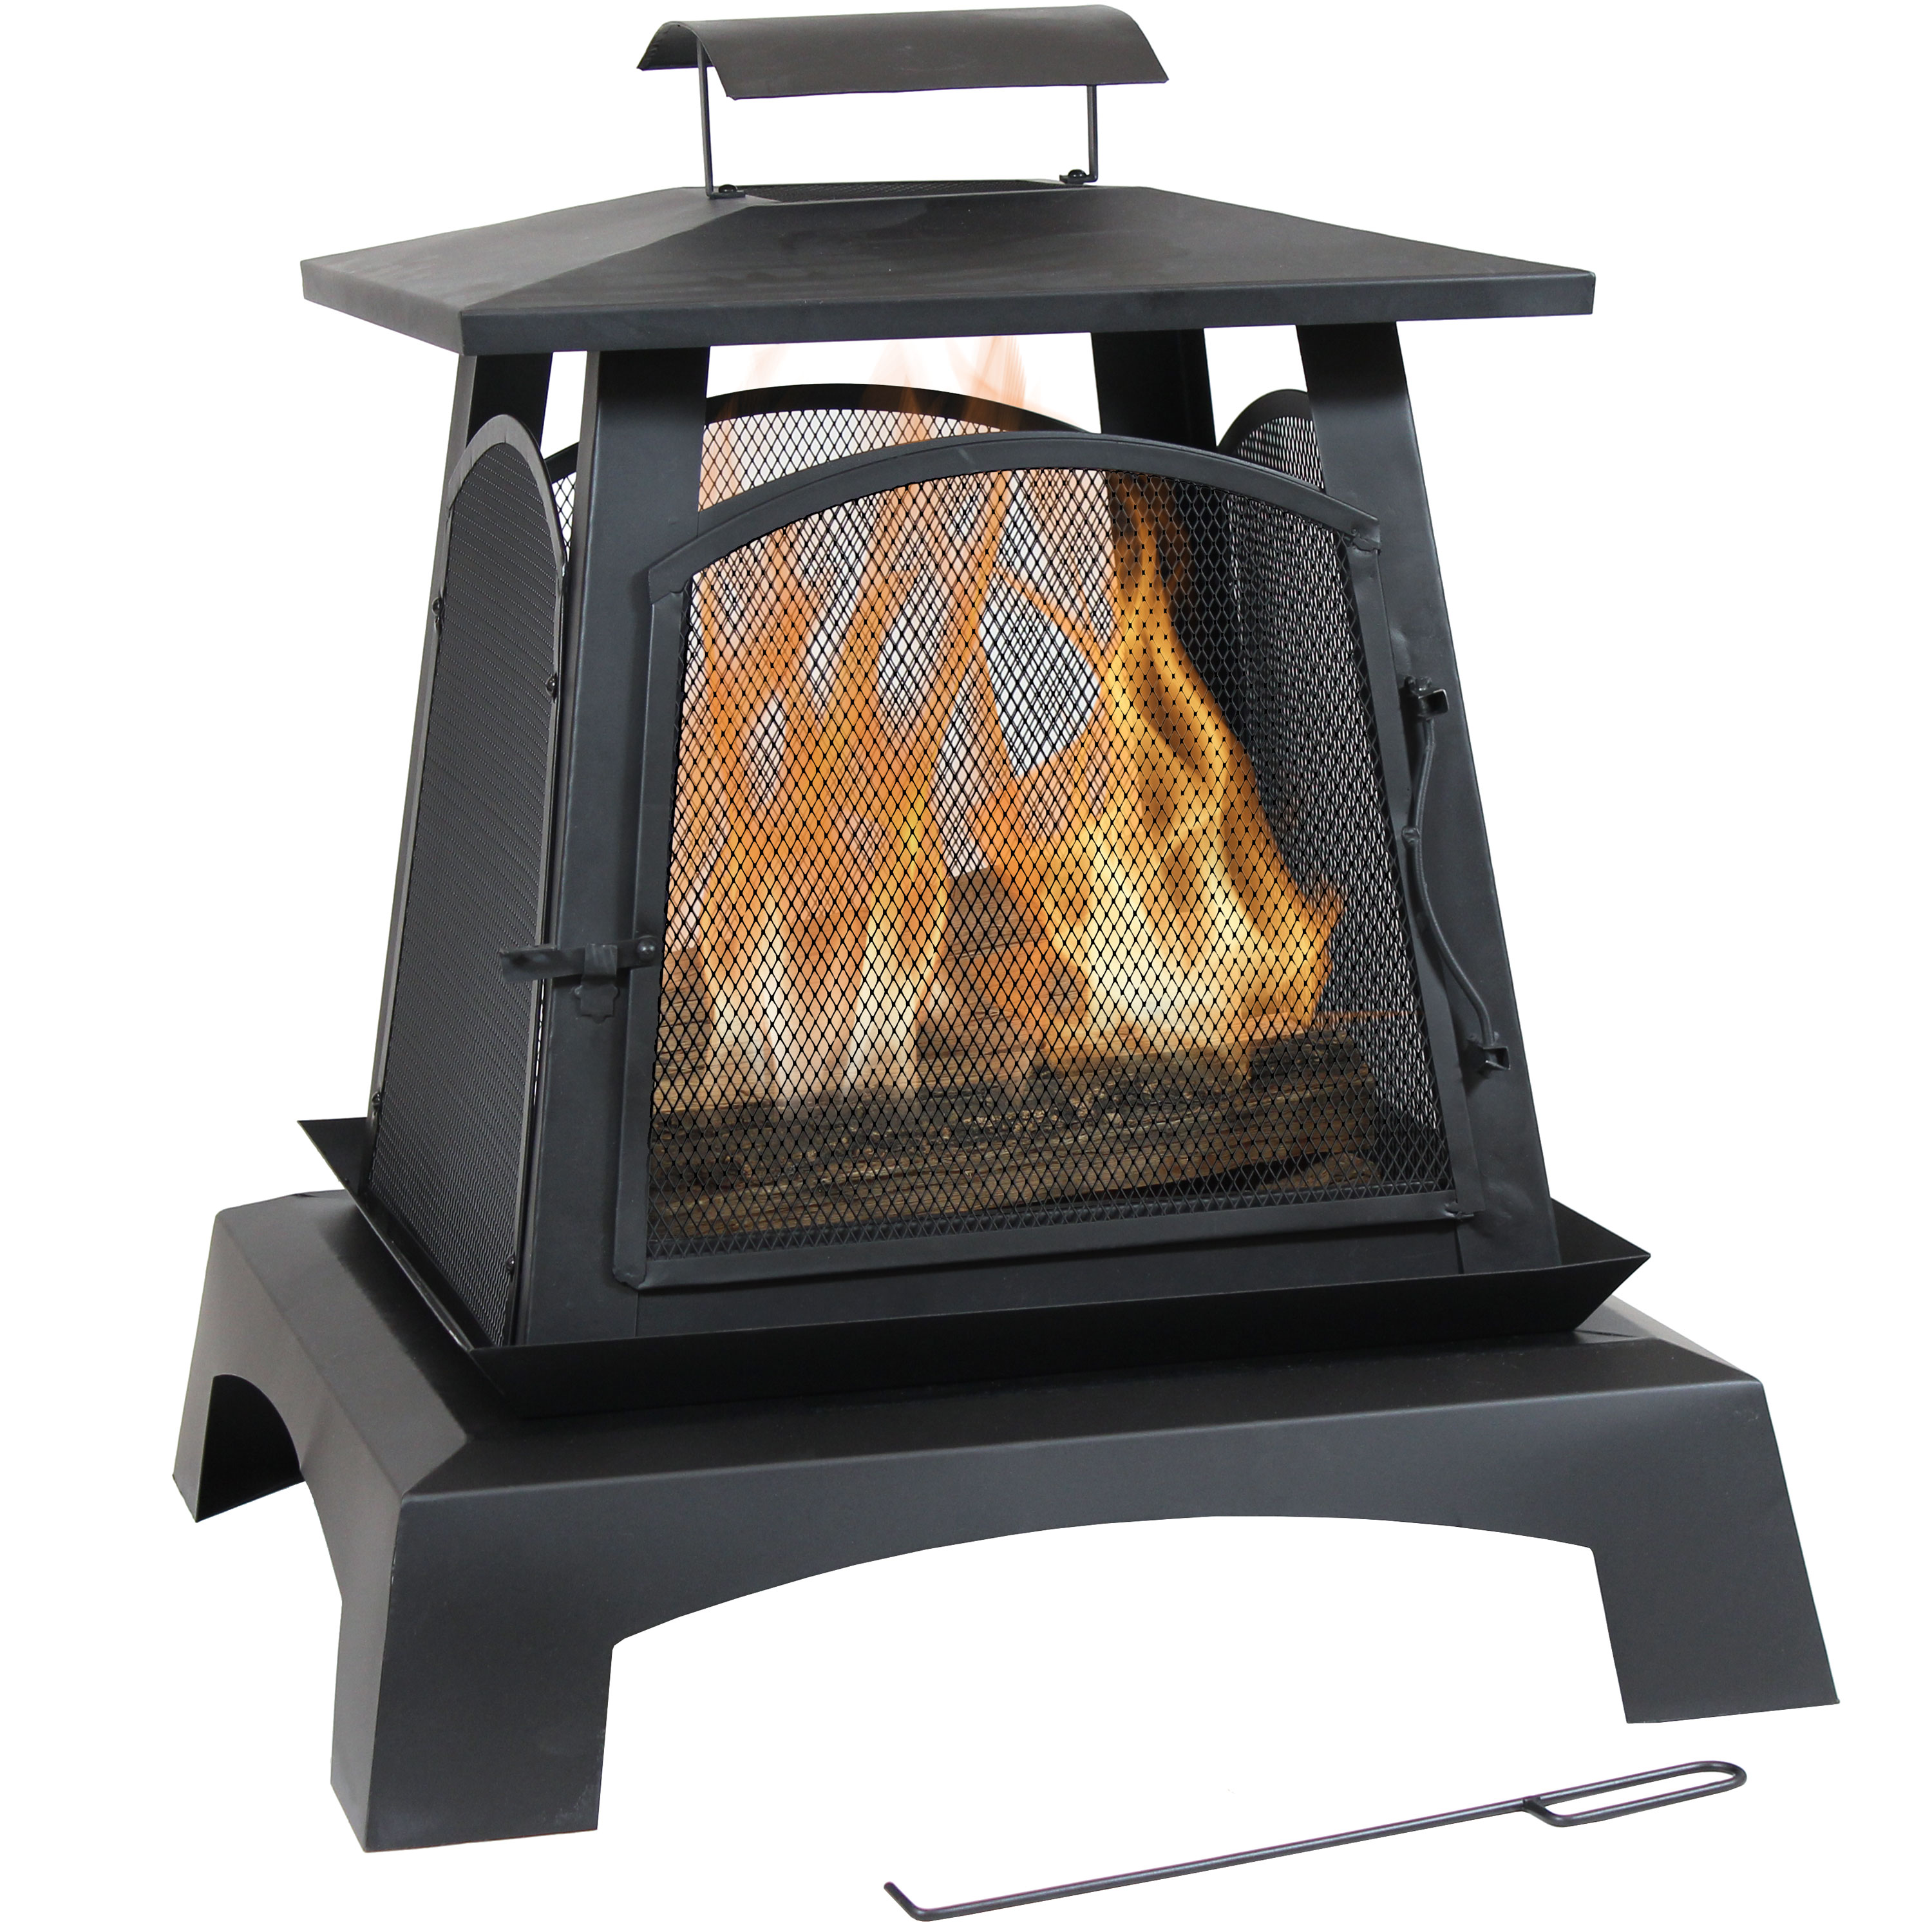 Sunnydaze Pagoda Style Steel Enclosed Outdoor Fireplace Heater